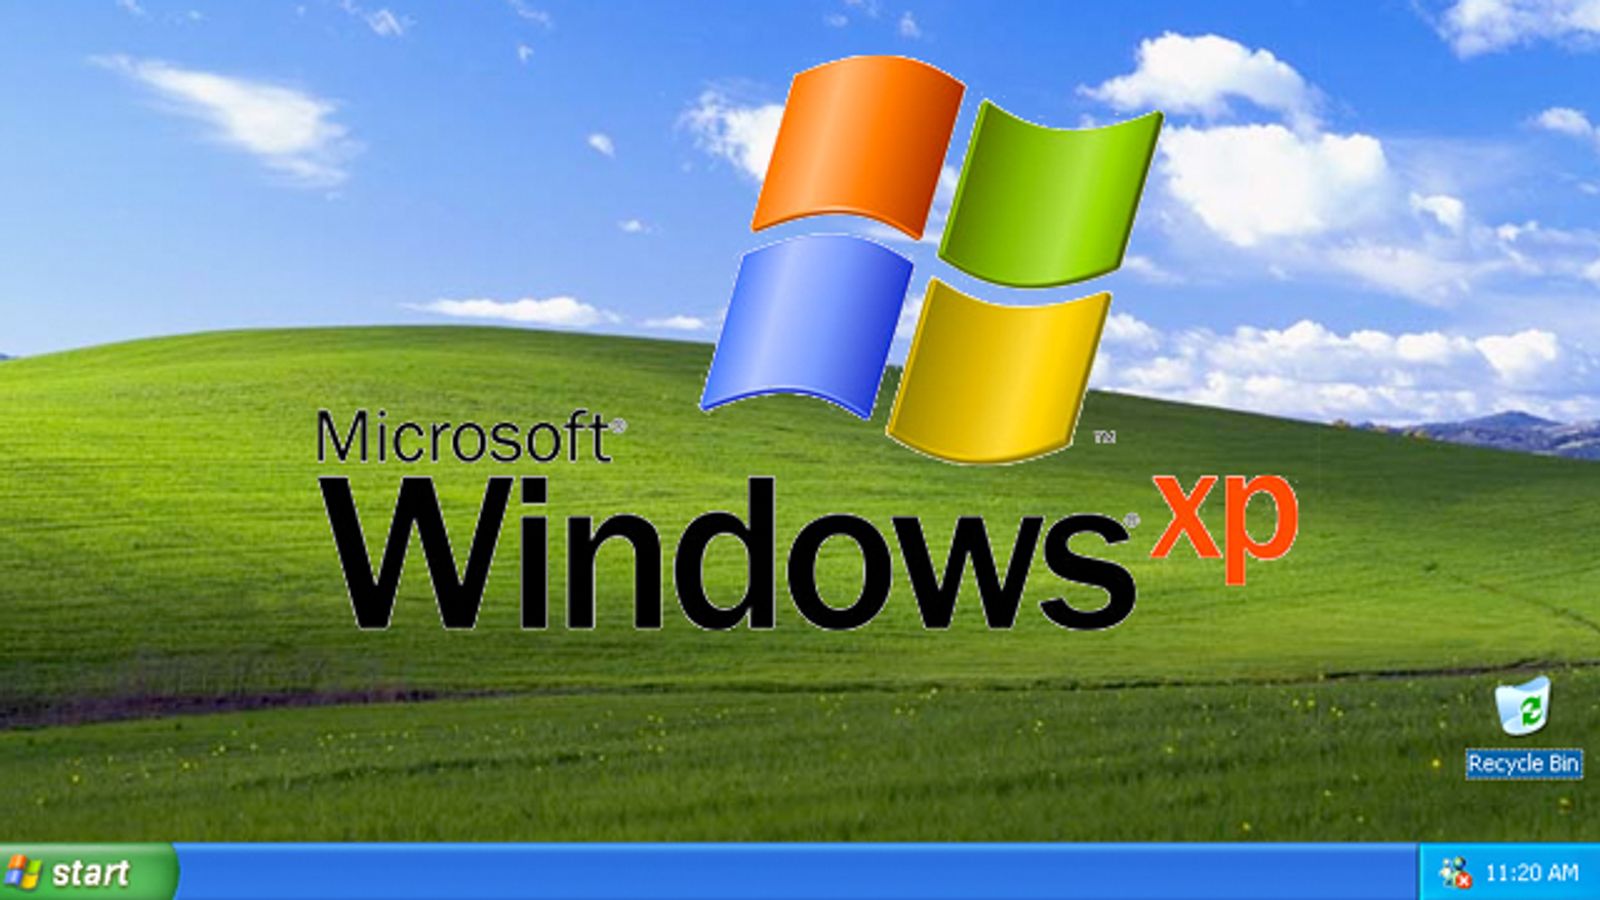 Windows XP Extended Through 2010